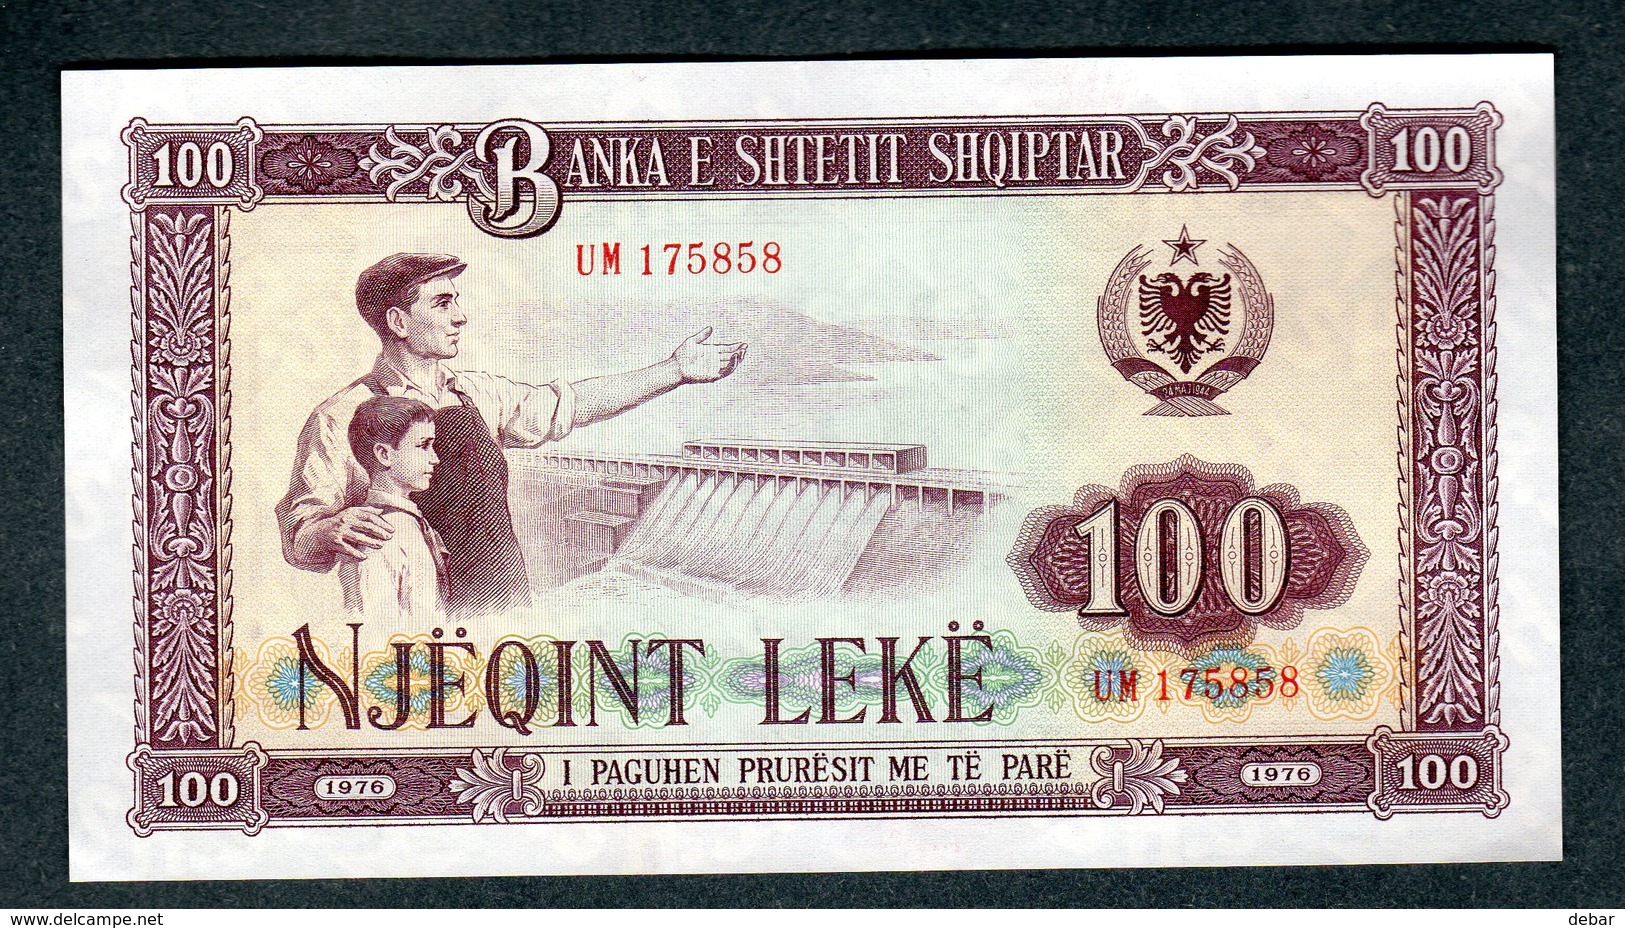 ALBANIA 100 LEK 1976 NJEQINT LEKE - Albania